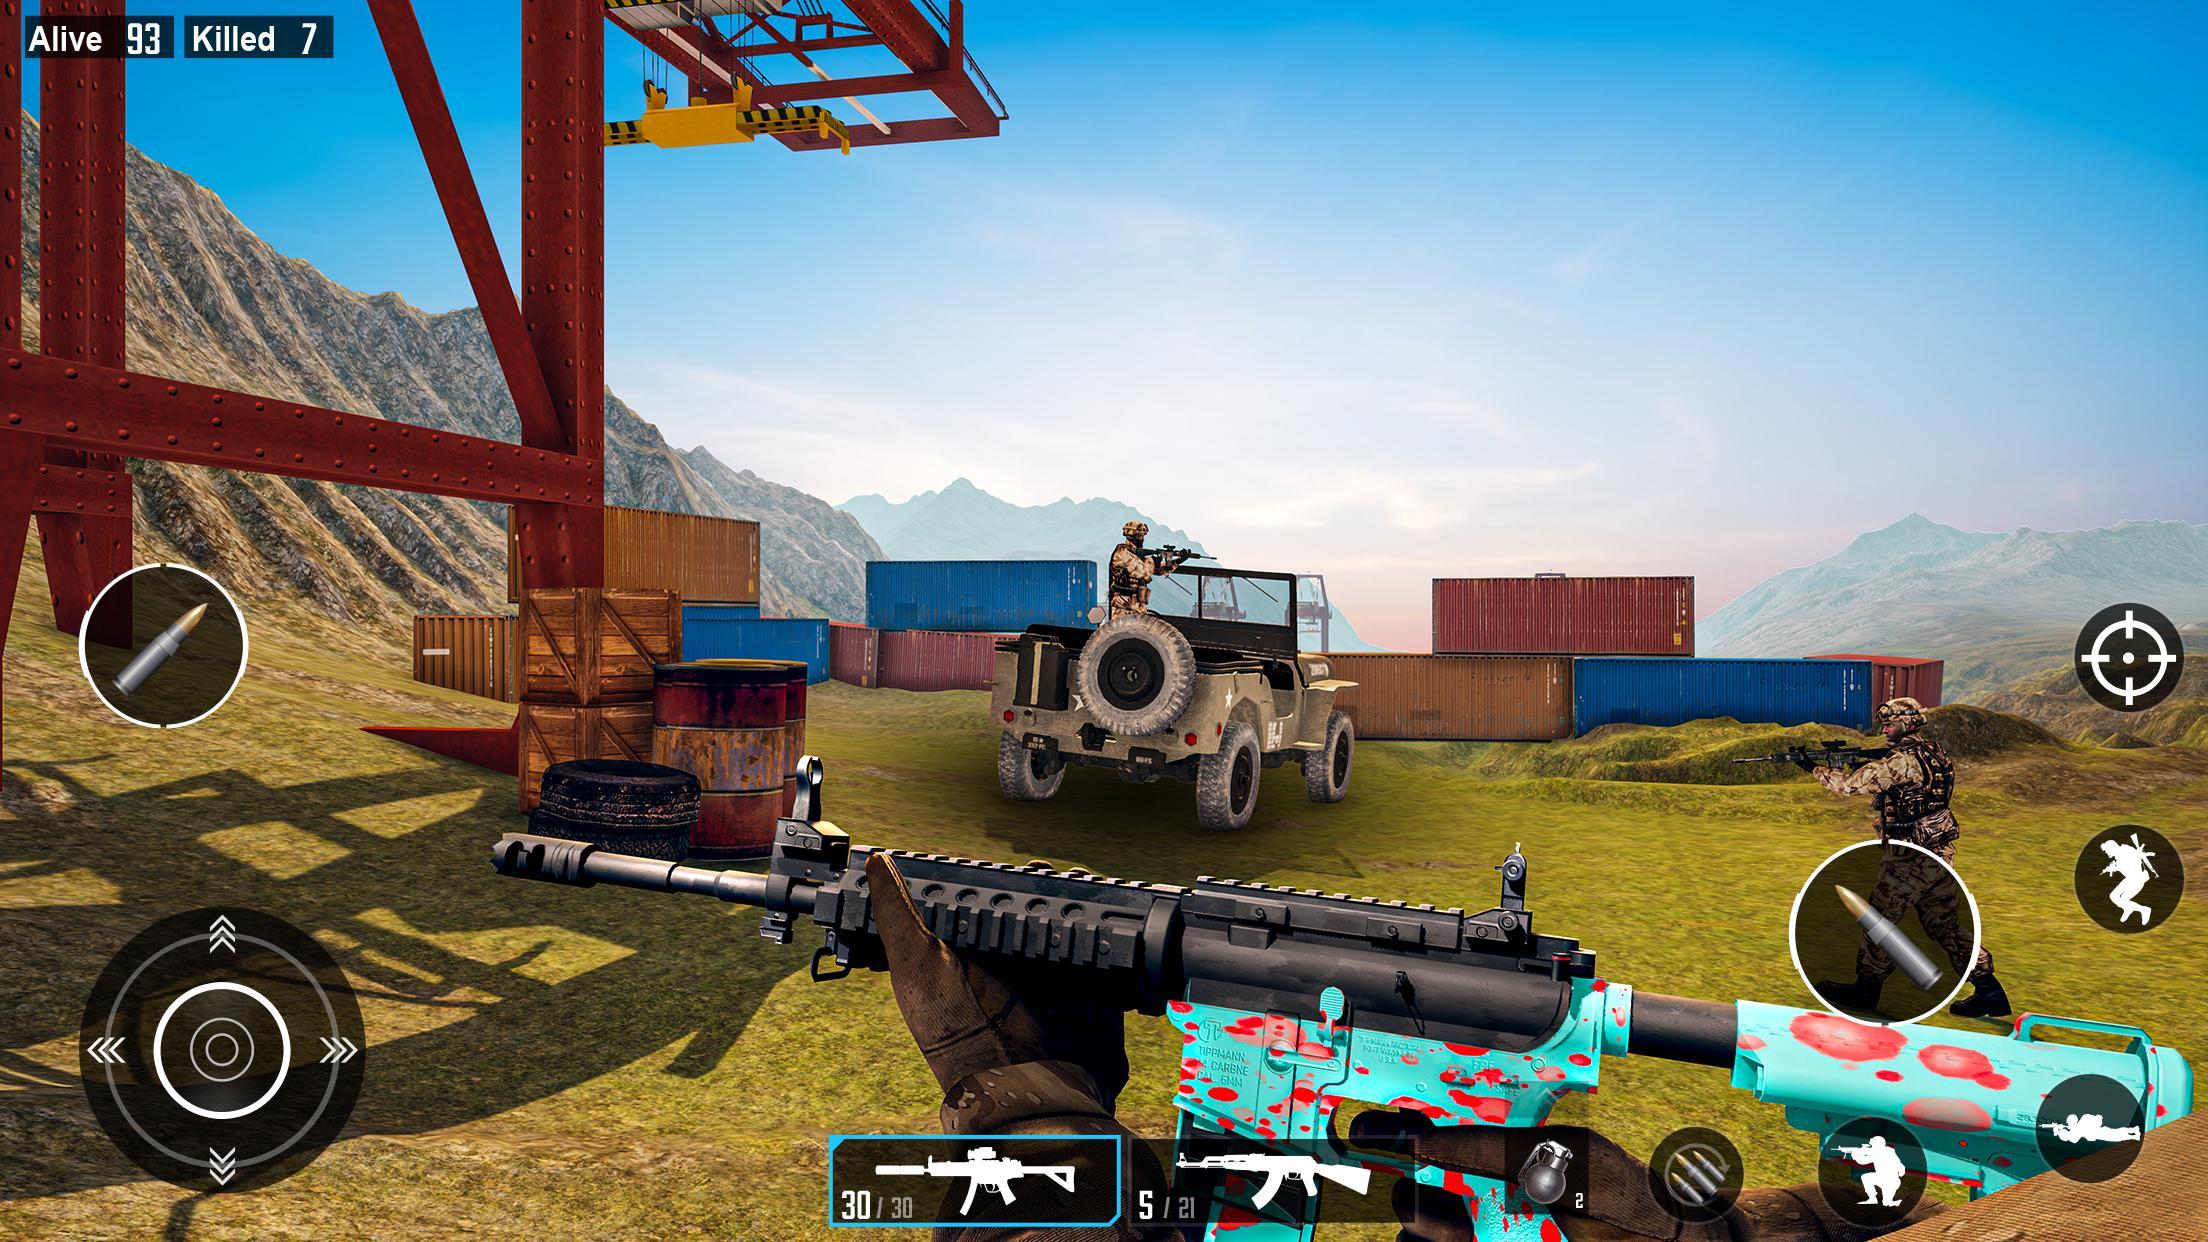 Real Commando Mission - Free Shooting Games 2020 3.5 Screenshot 6